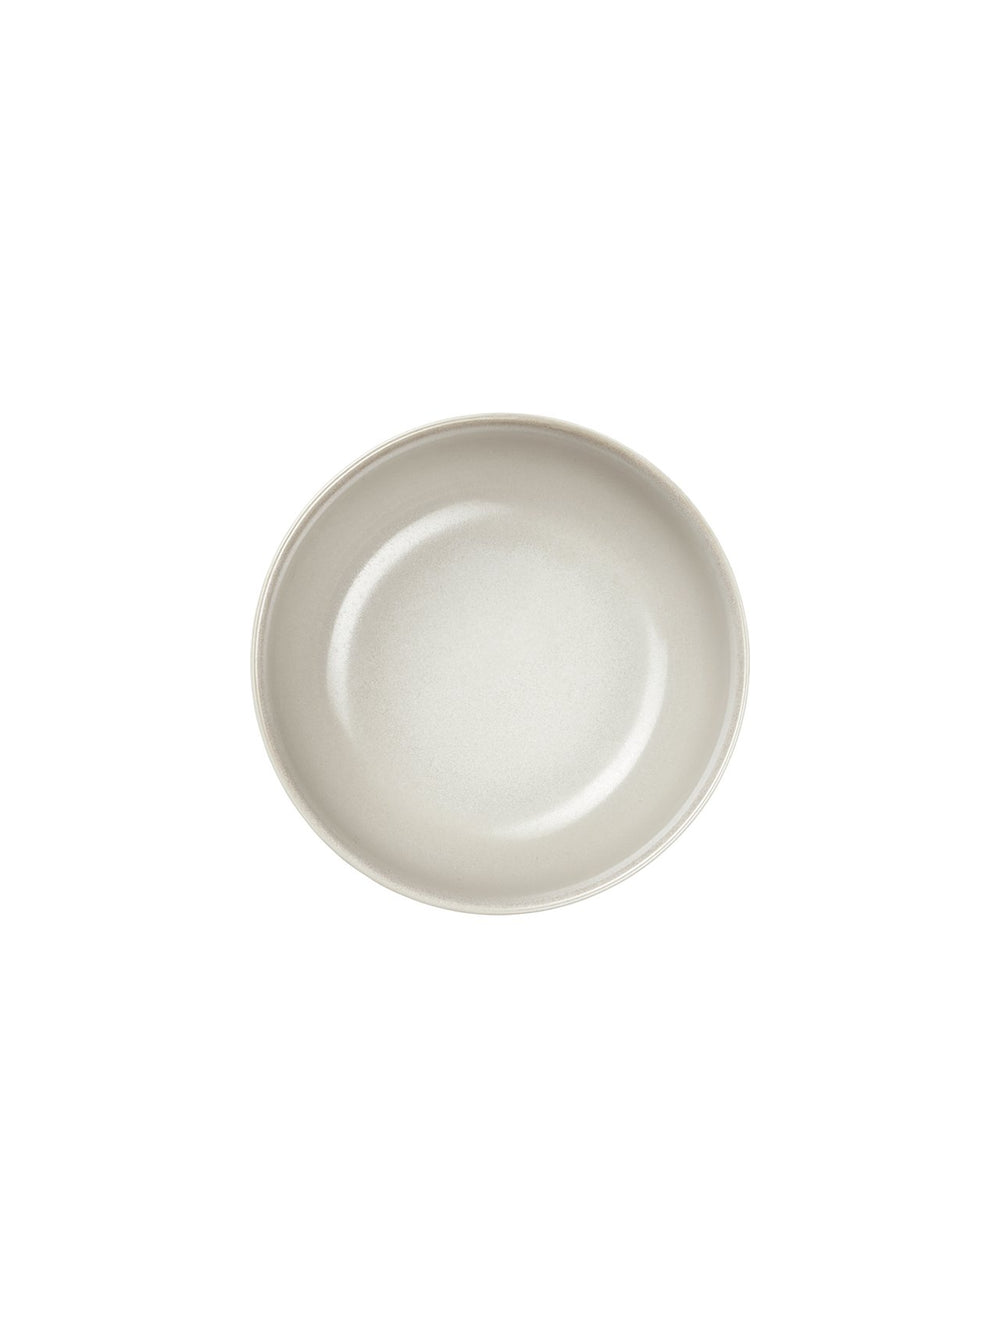 ASA - Müslischale, tofu, coppa, 13,5cm-ASA-19290184